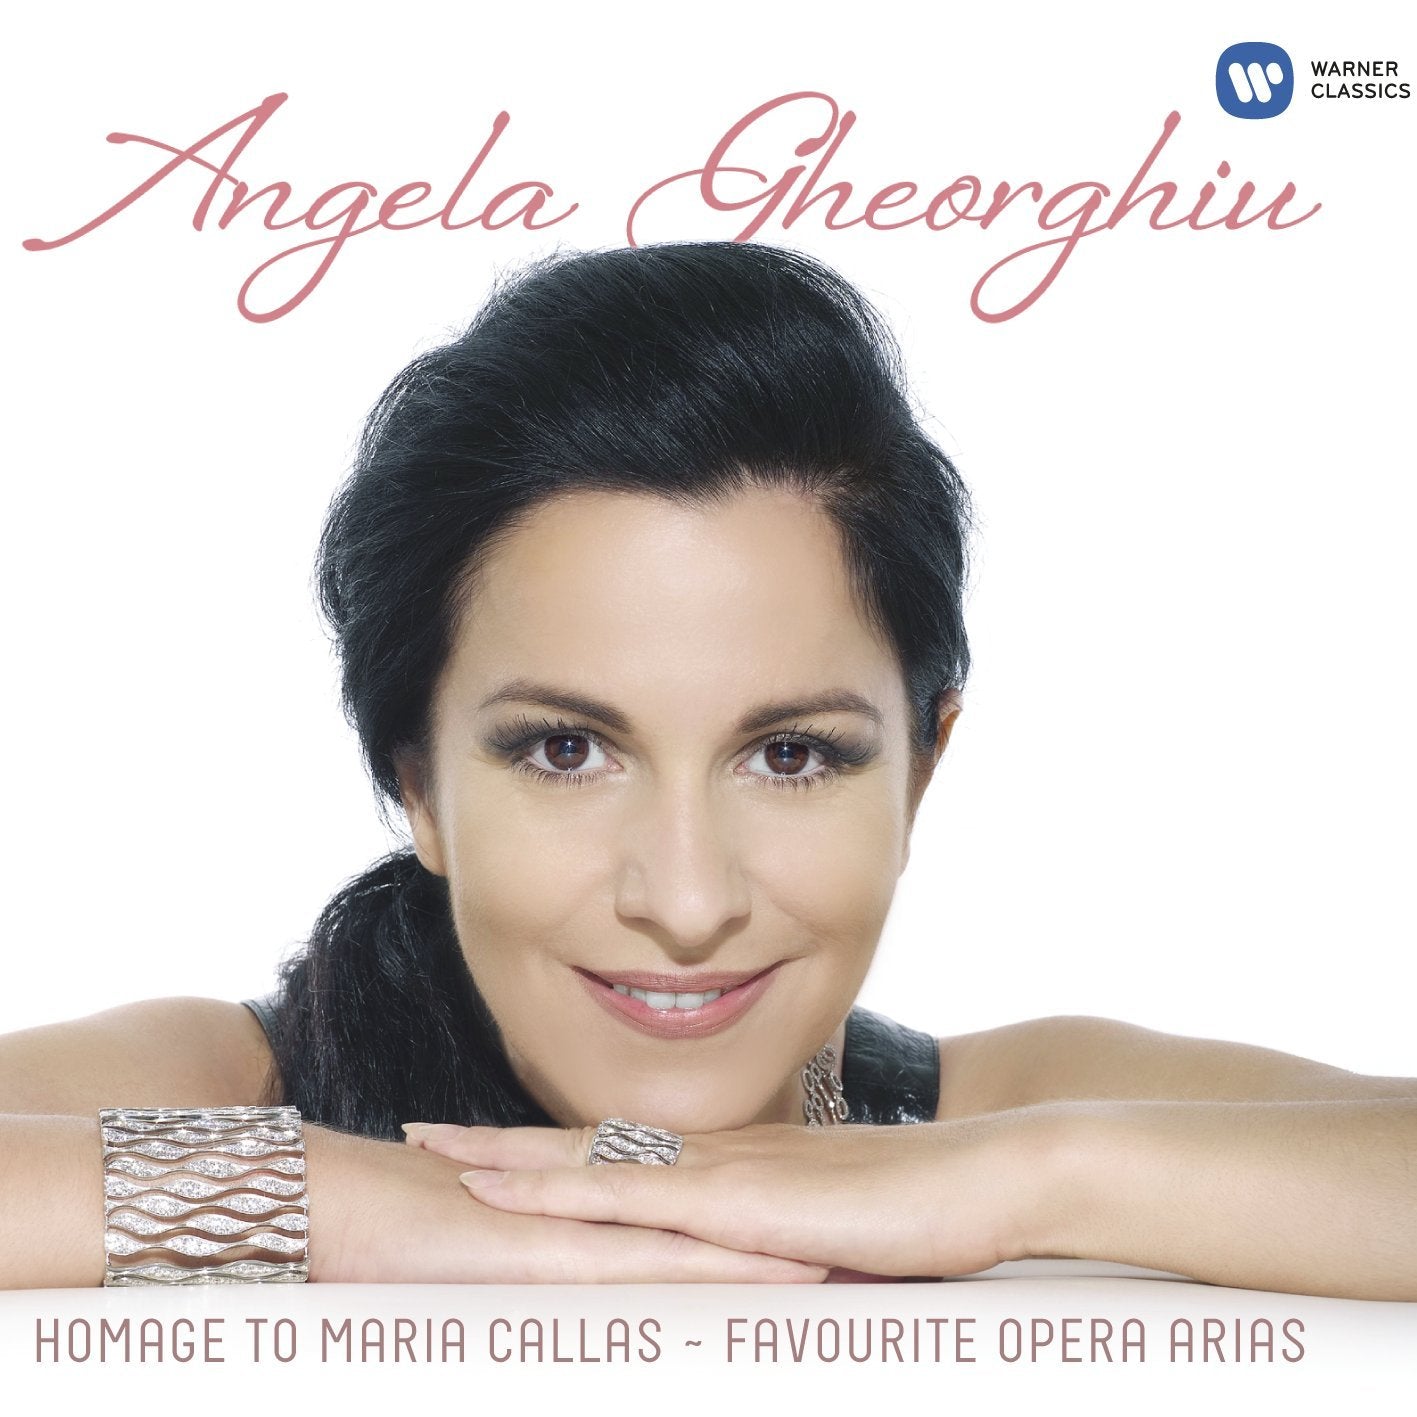 ANGELA GHEORGHIU: TRIBUTE TO MARIA CALLAS (CD + BOOK)